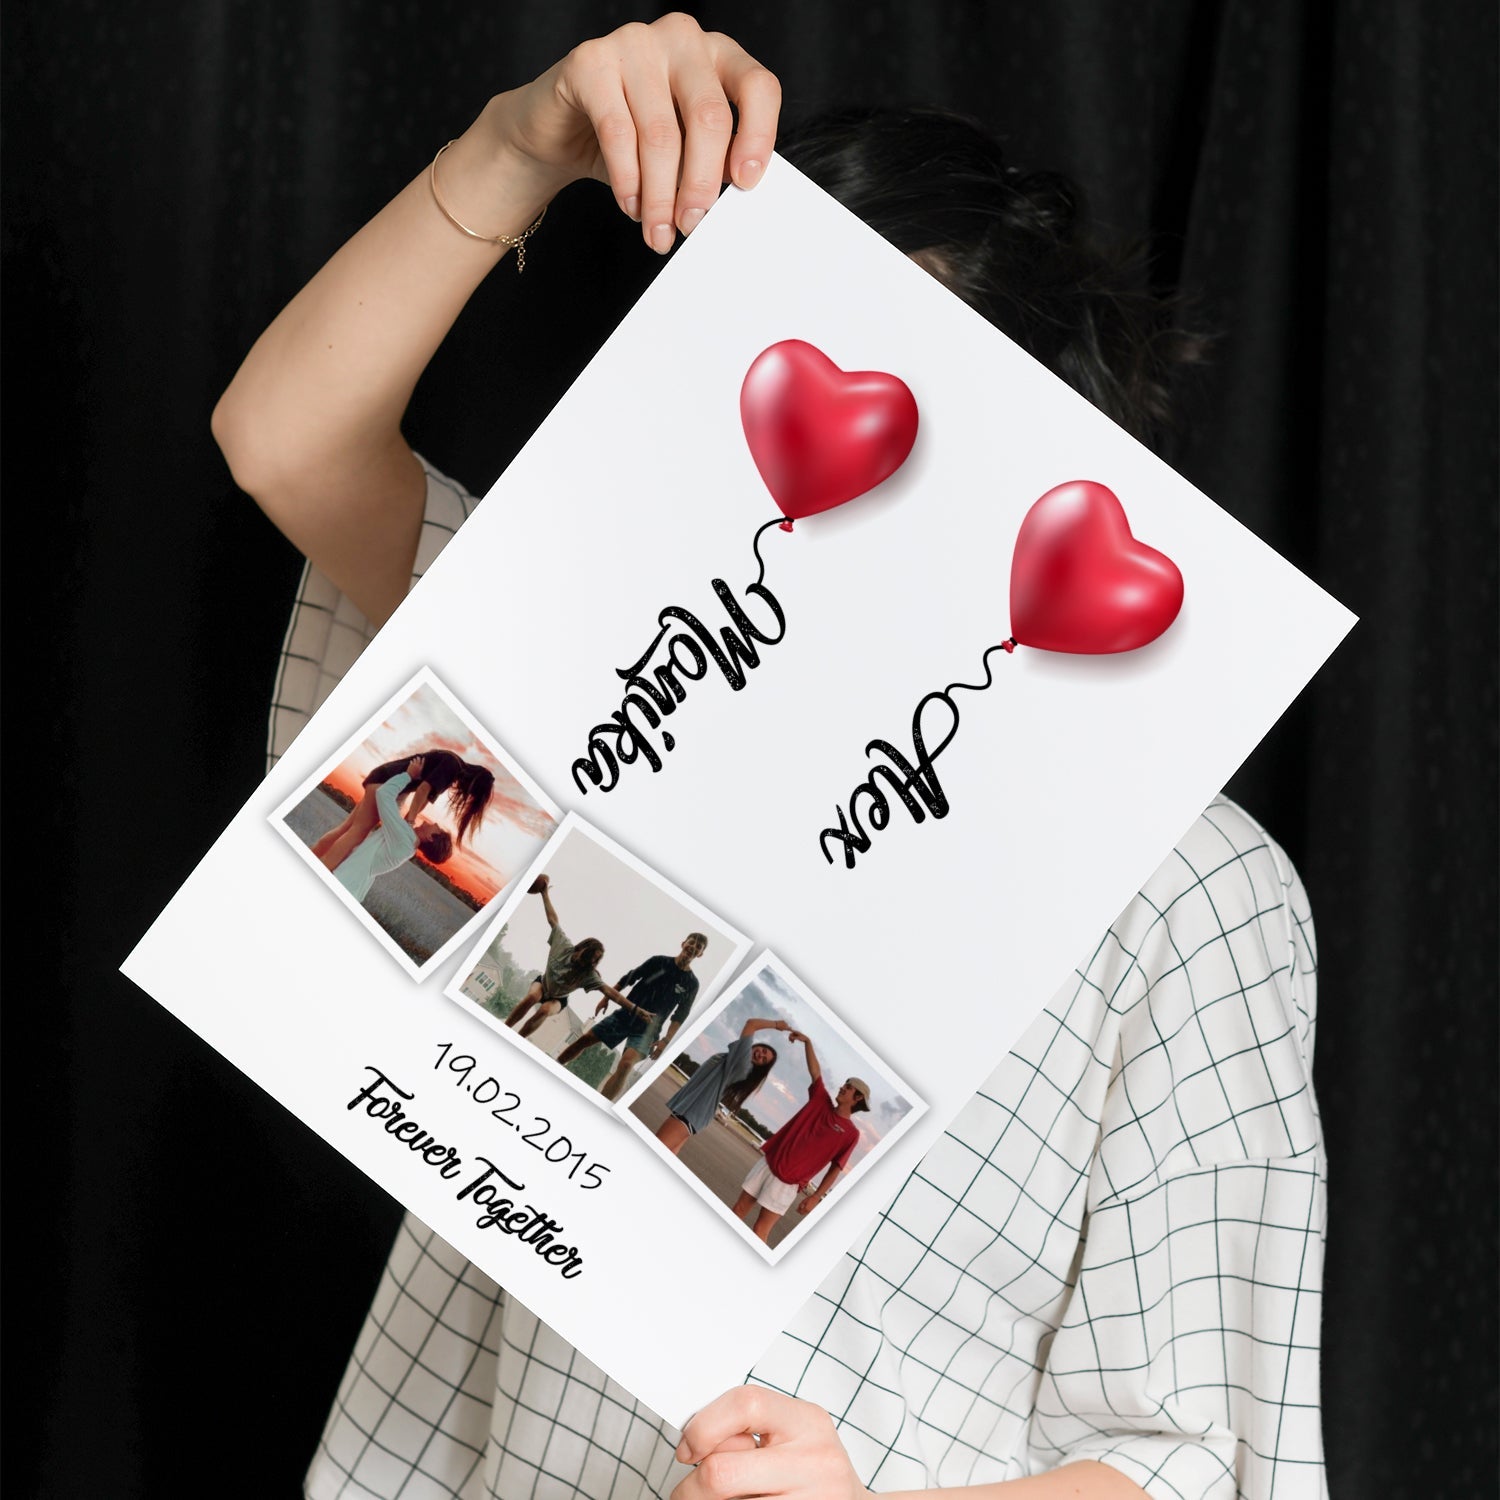 Personalisiertes Poster Paare Herzballons Mit Fotos